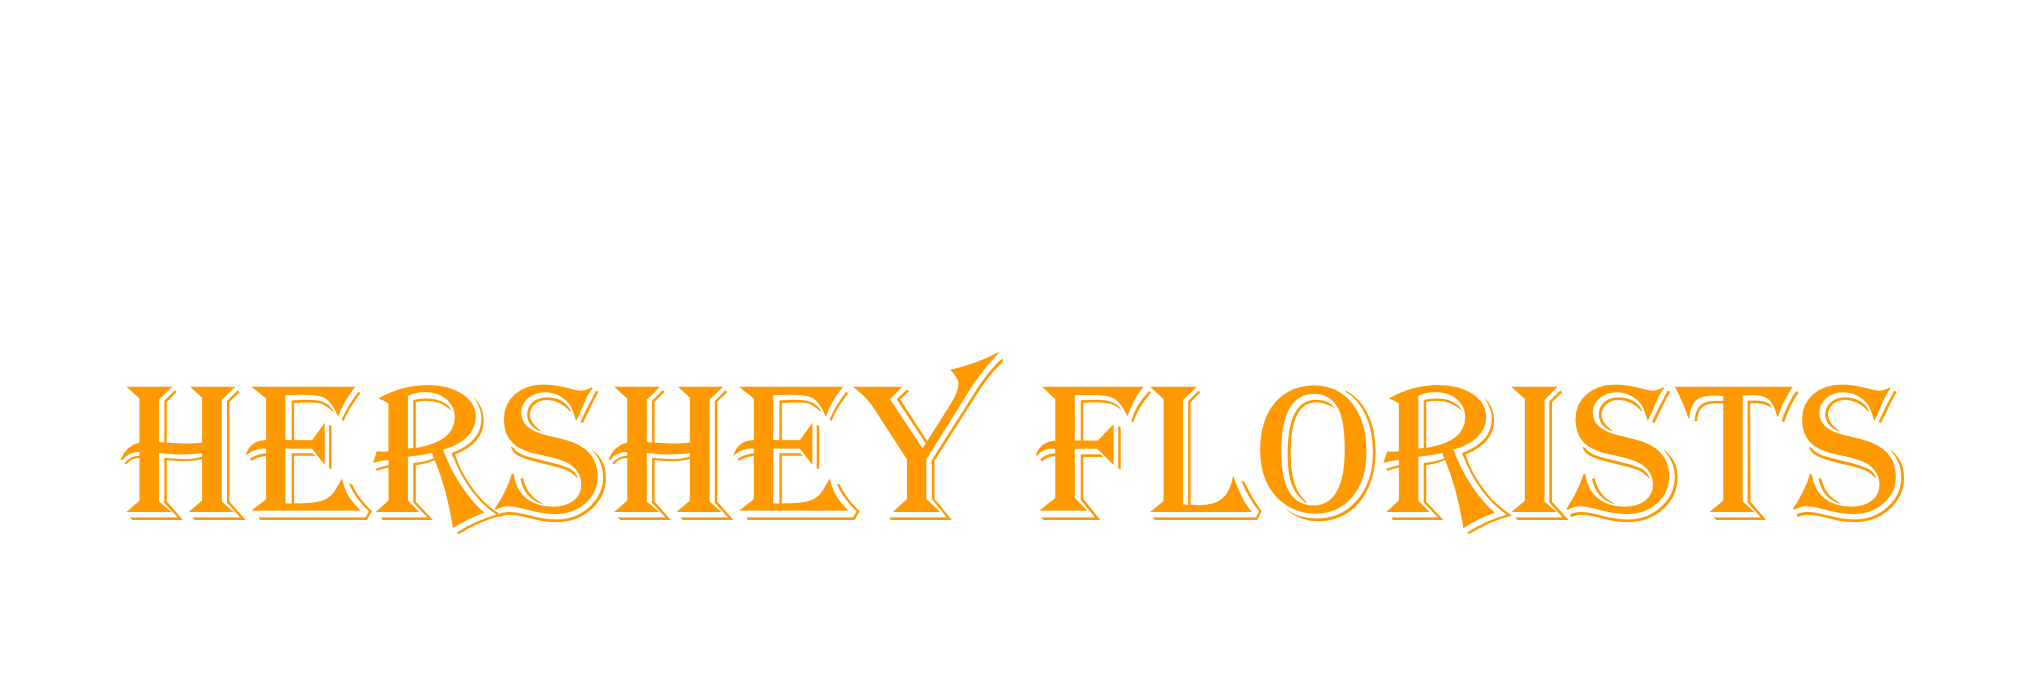 Hershey Florists - St. Cloud, FL 34769 - (407)892-3210 | ShowMeLocal.com